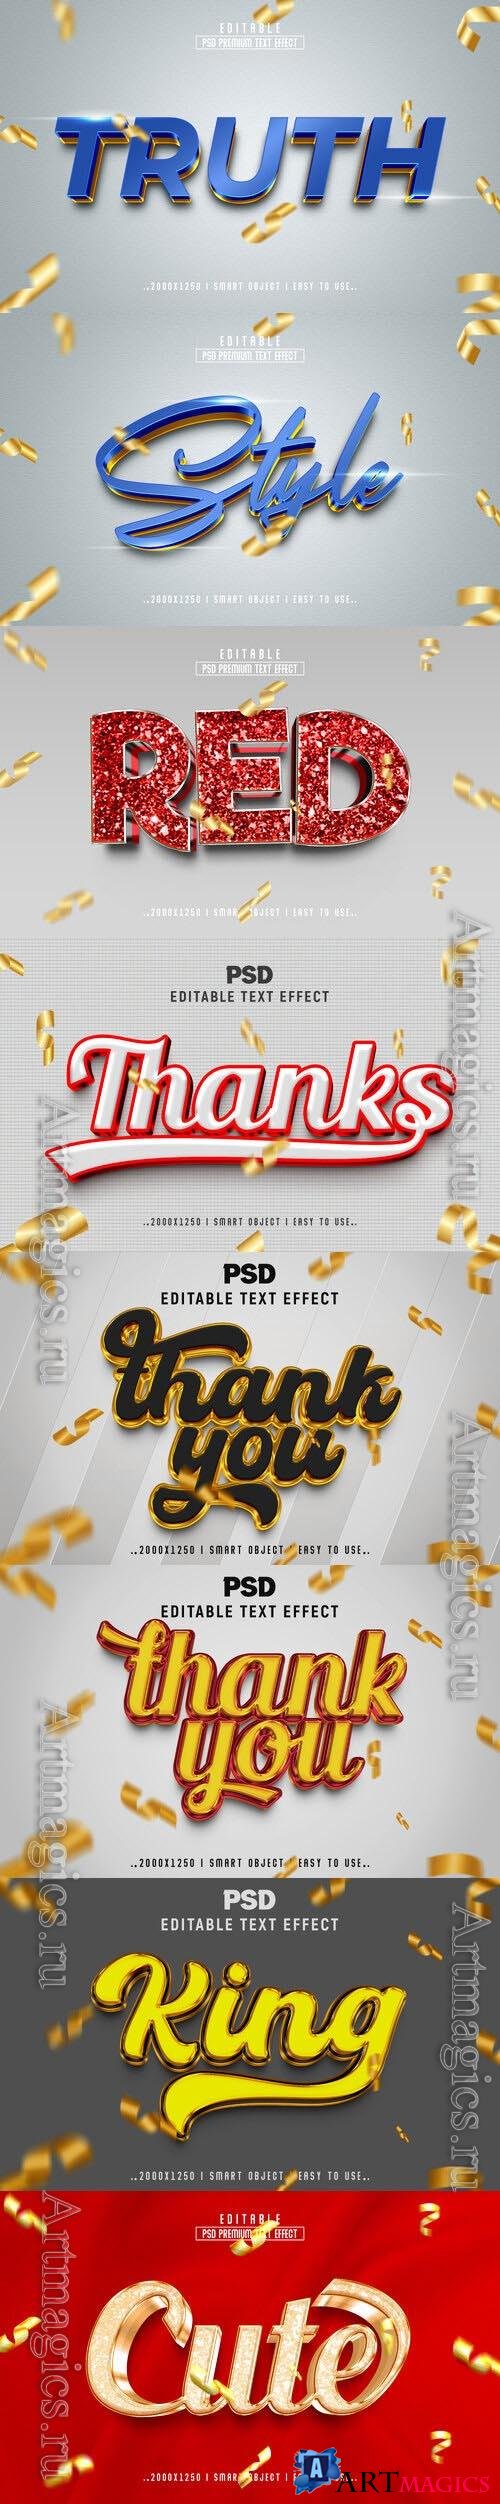 8 Psd style text effect editable set vol 40